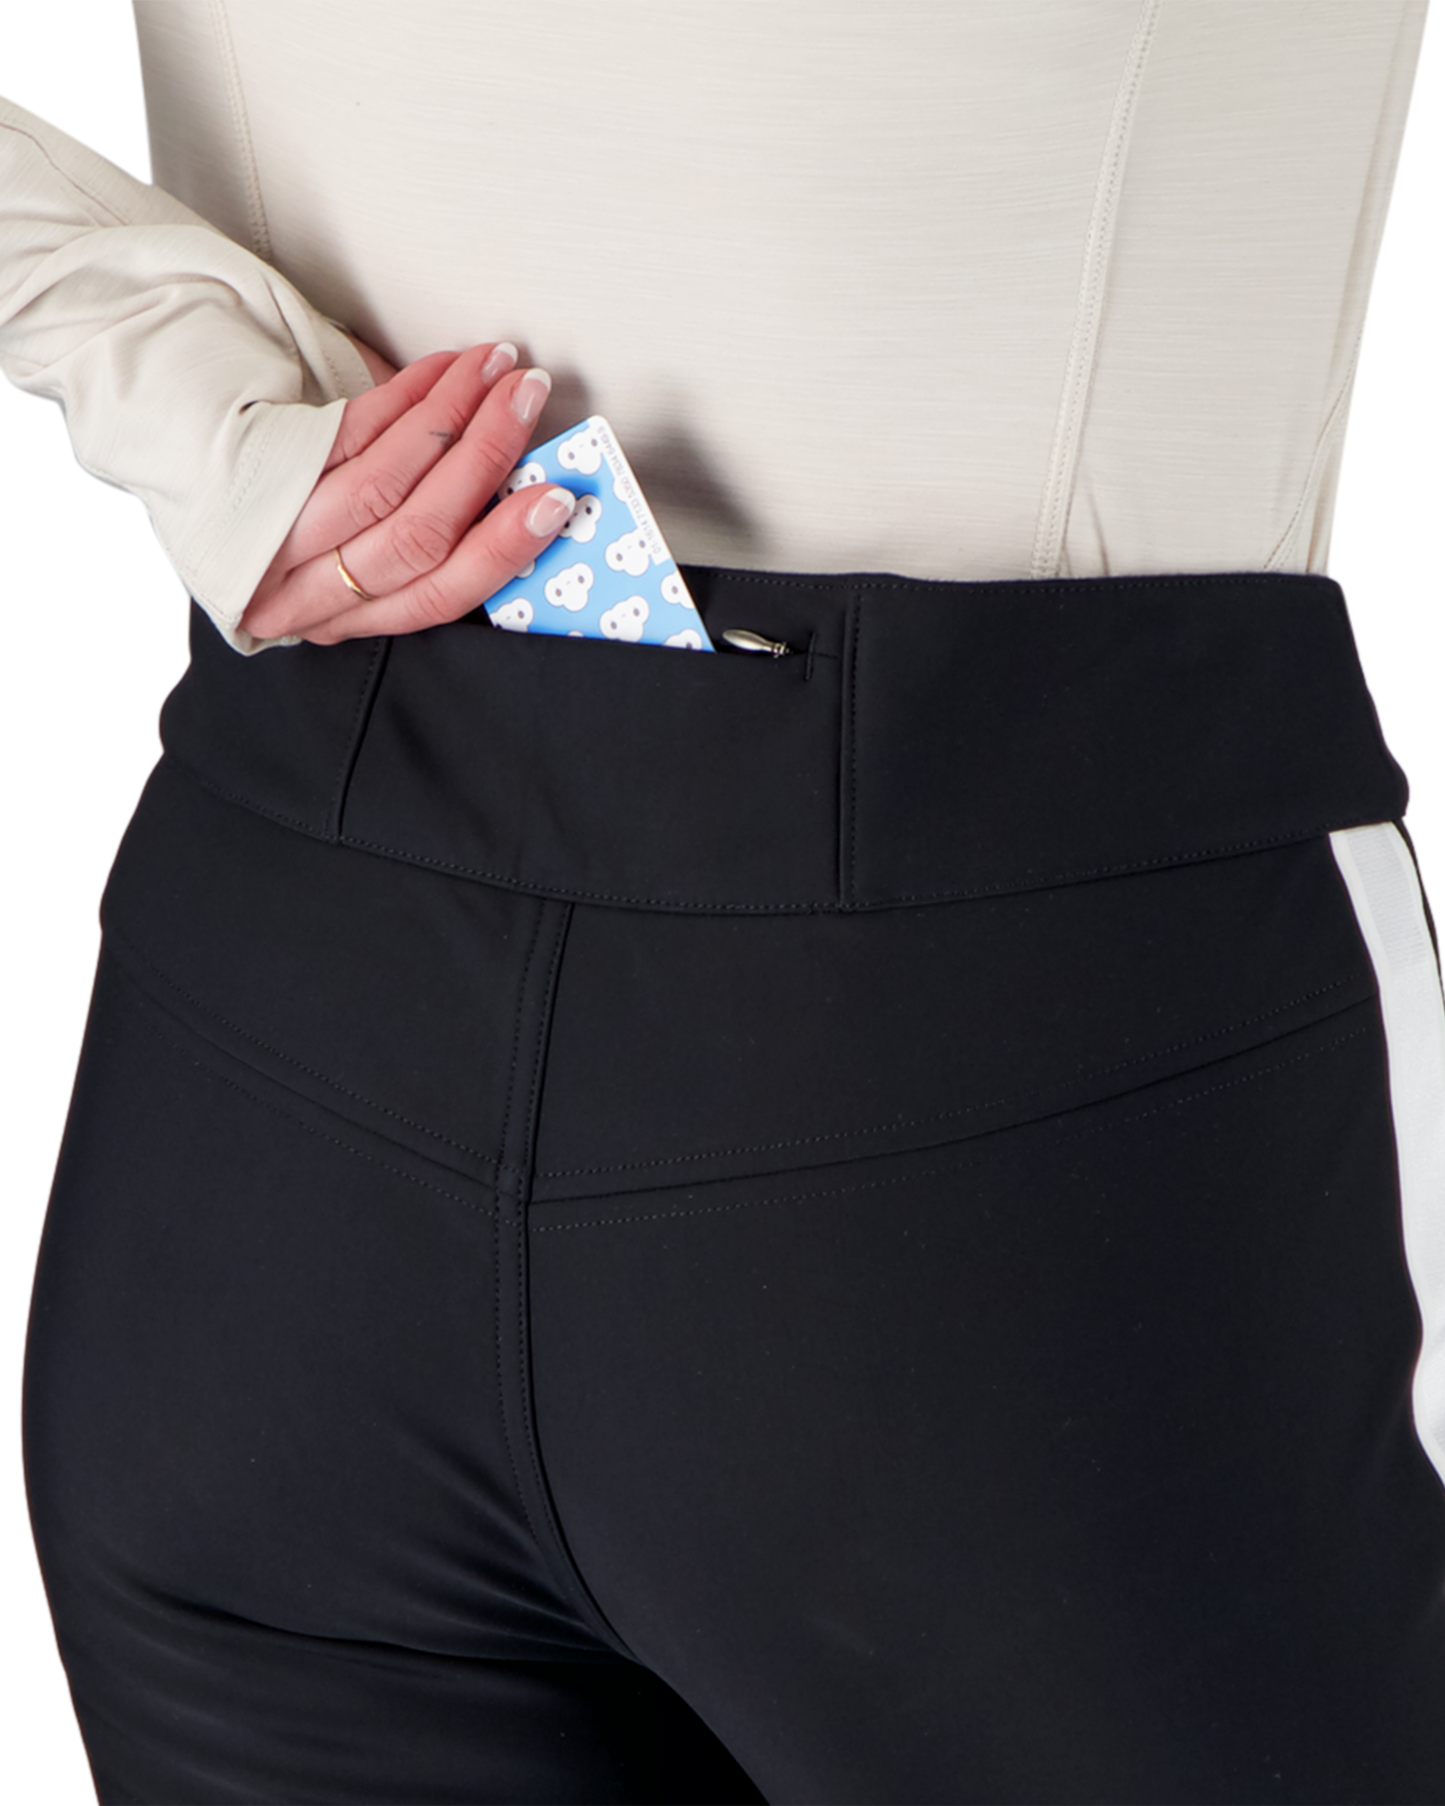 Obermeyer Bond Sport Pants - Women's